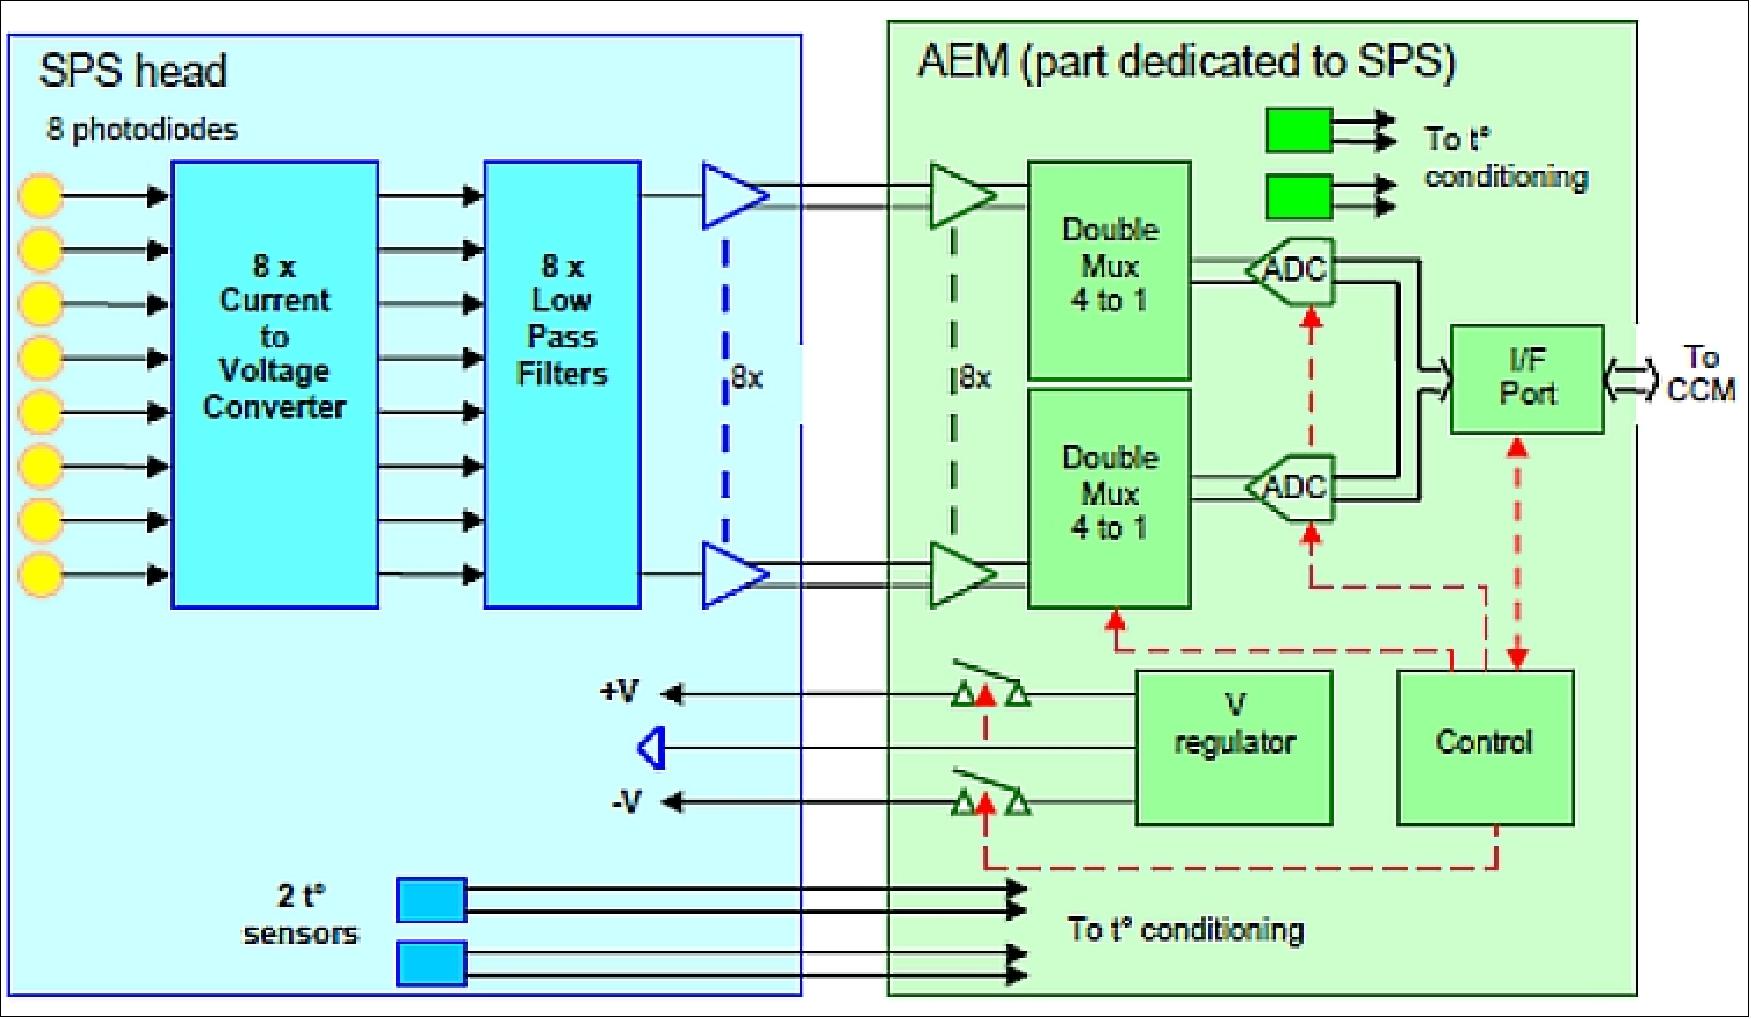 Figure 58: The AEM architecture for SPS data acquisition (image credit: ASPIICS consortium)